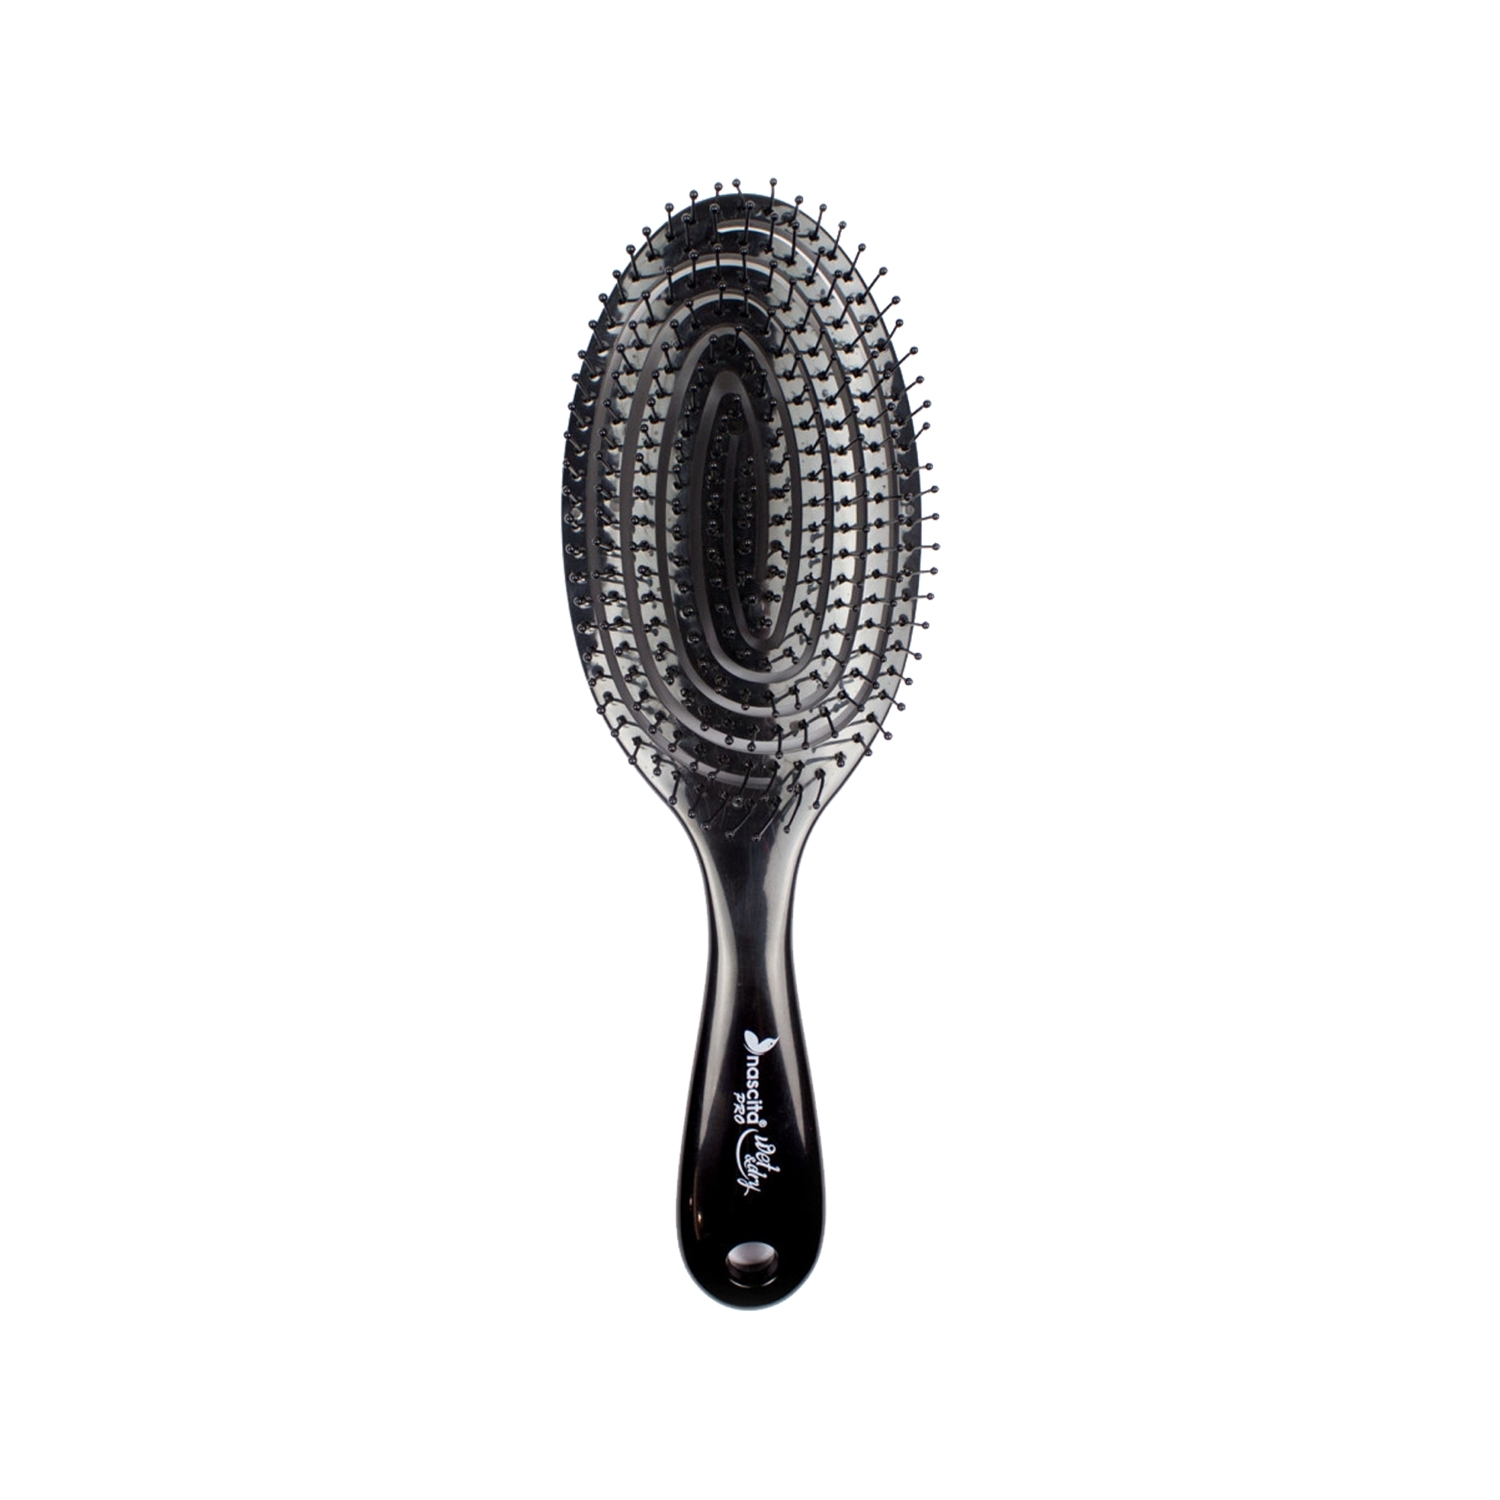 Nascita Pro Wet Dry 3D Fleksi Saç Fırçası Siyah NASFPRO00003BL